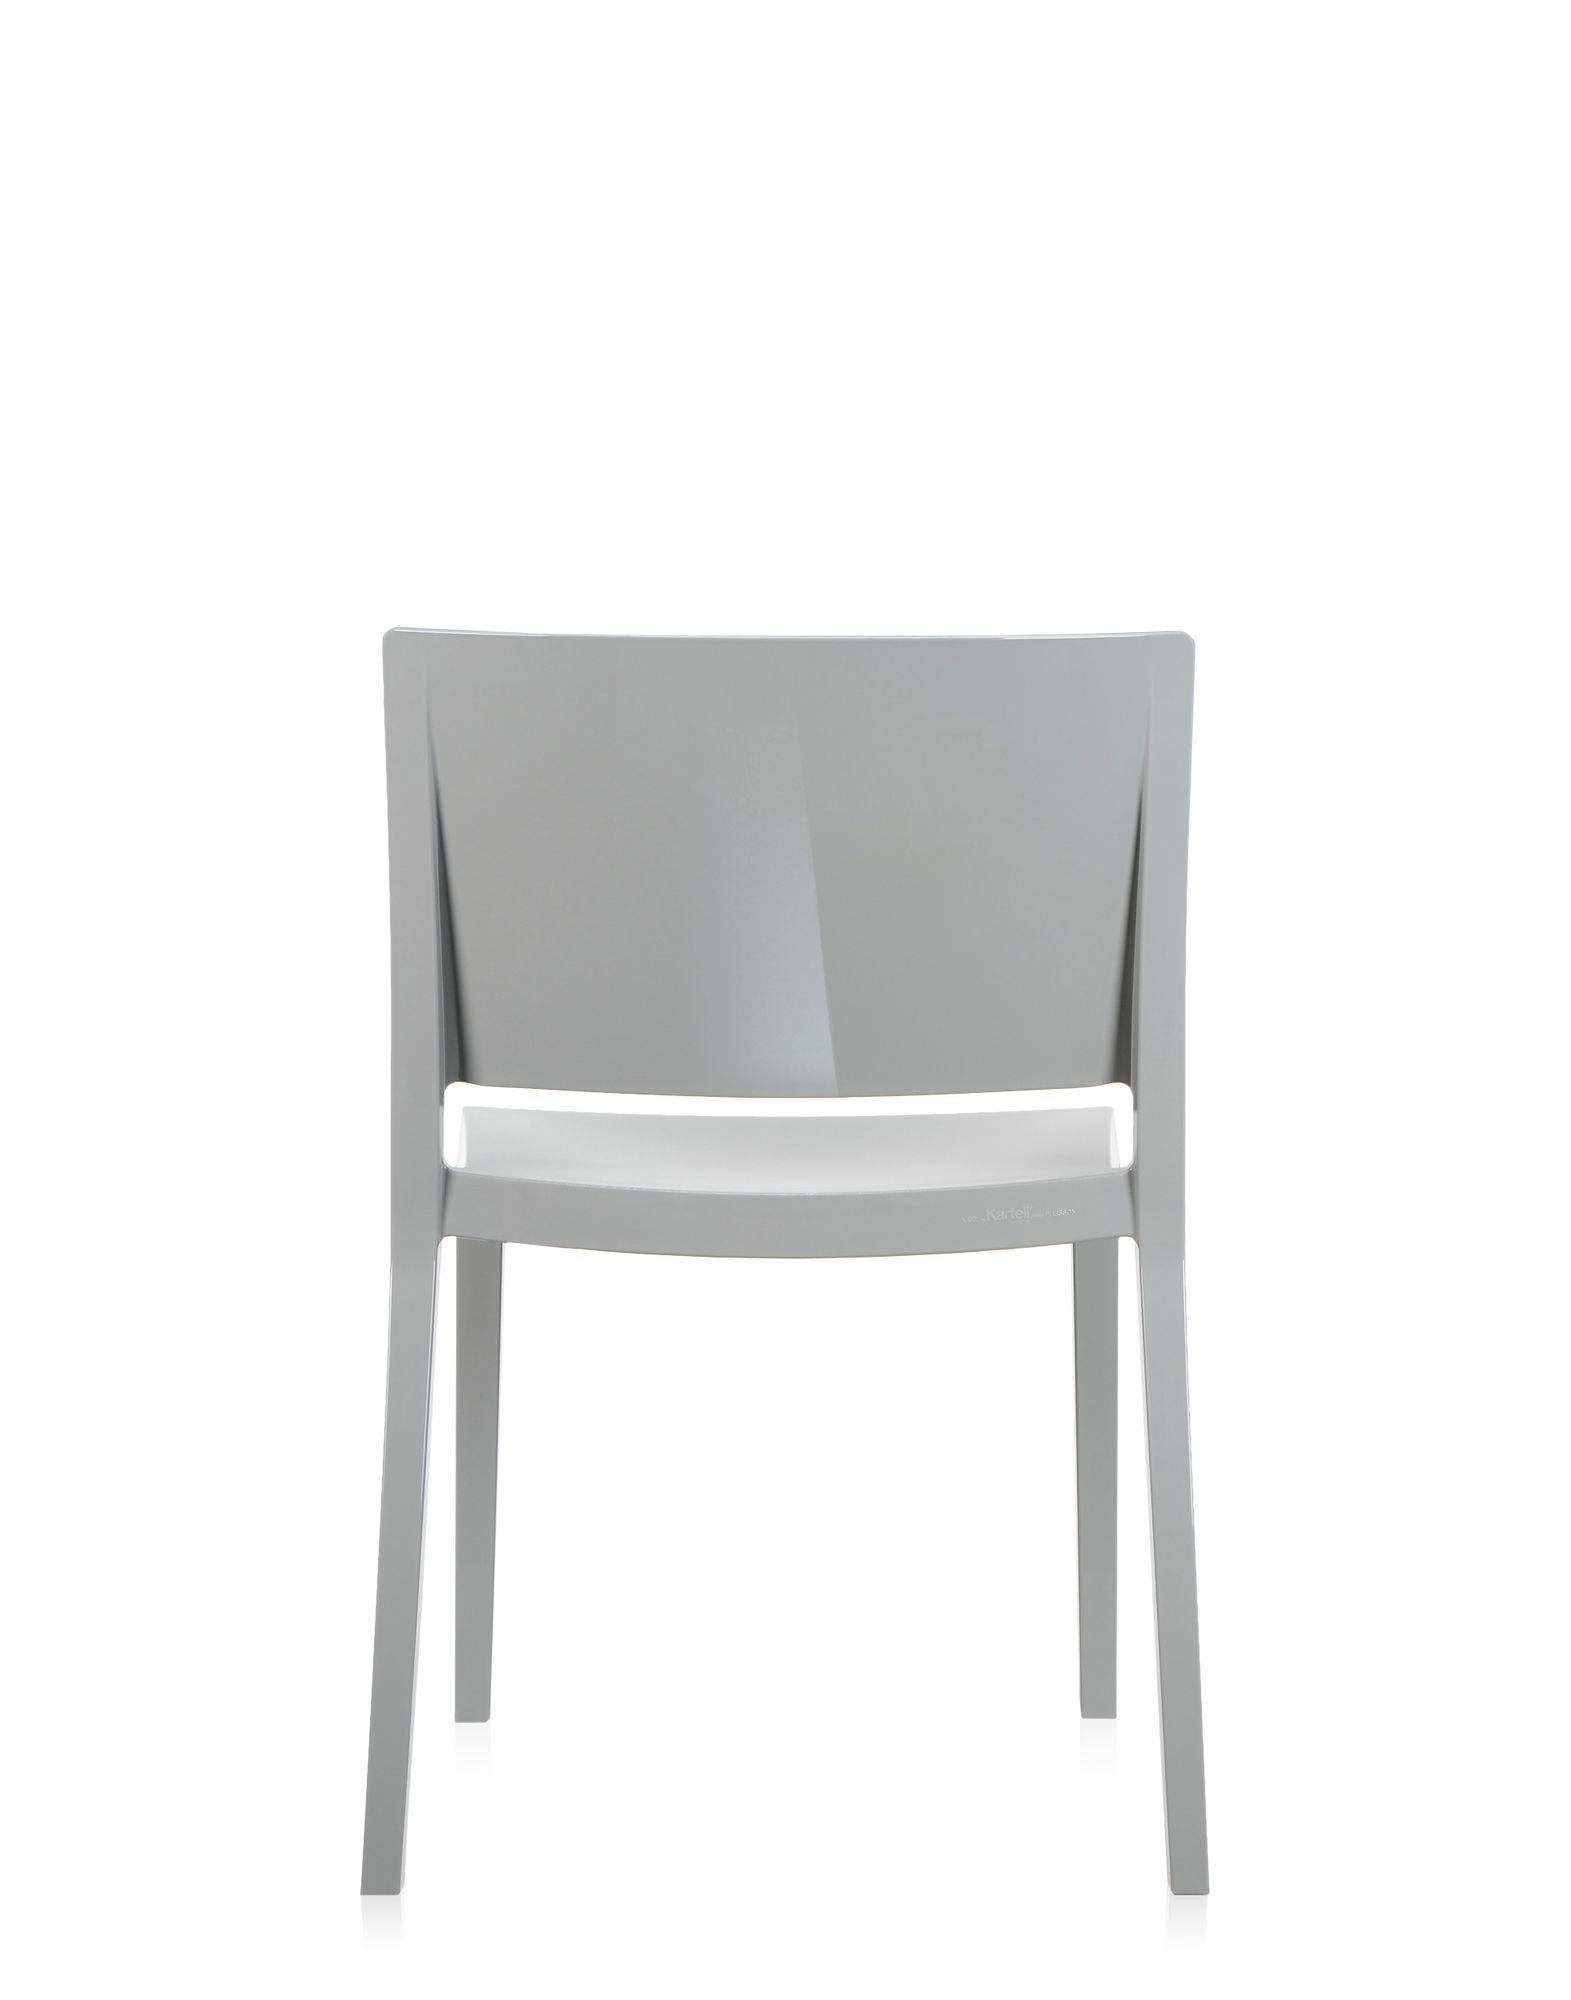 Italian Set of 2 Kartell Lizz Chairs in Grey by Piero Lissoni & Carlo Tamborini